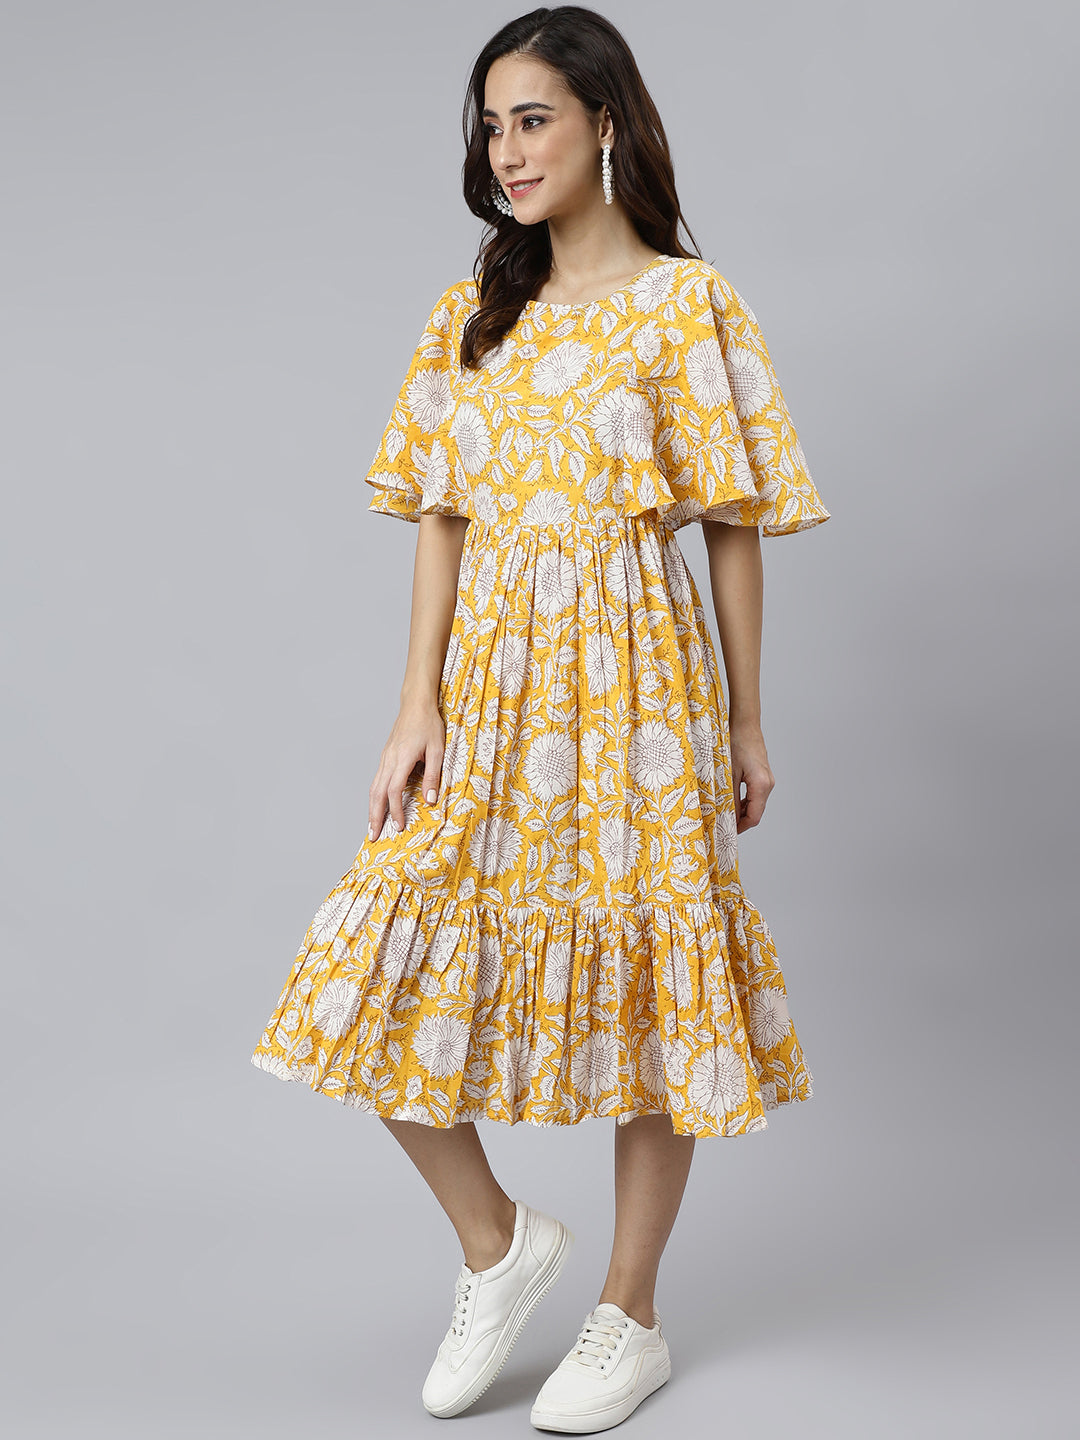 Women's Floral Printed Yellow Cotton Dress - Janasya